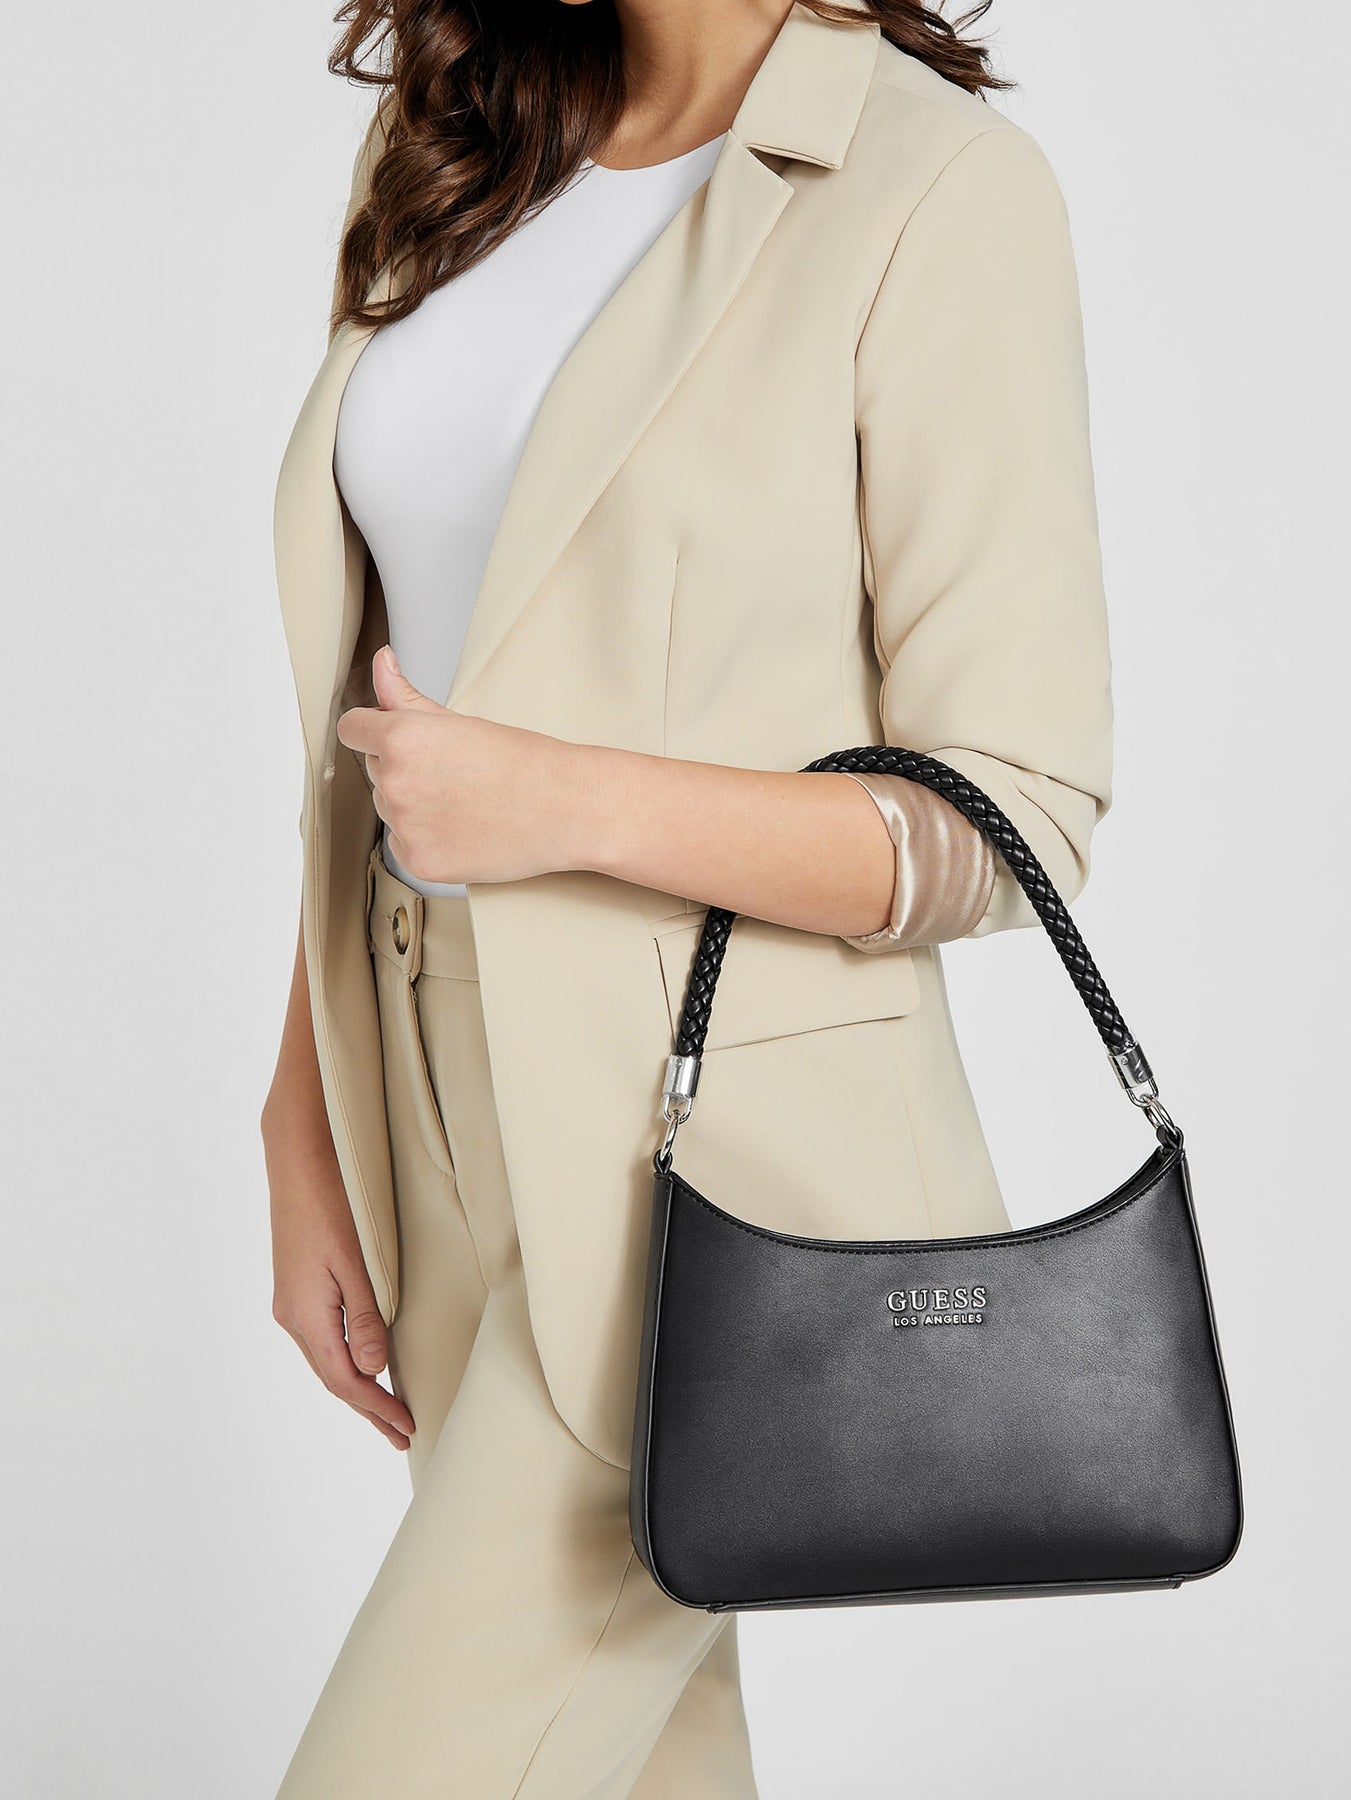 Guess Factory Curtin Top-Zip Shoulder Bag | Shop Premium Outlets